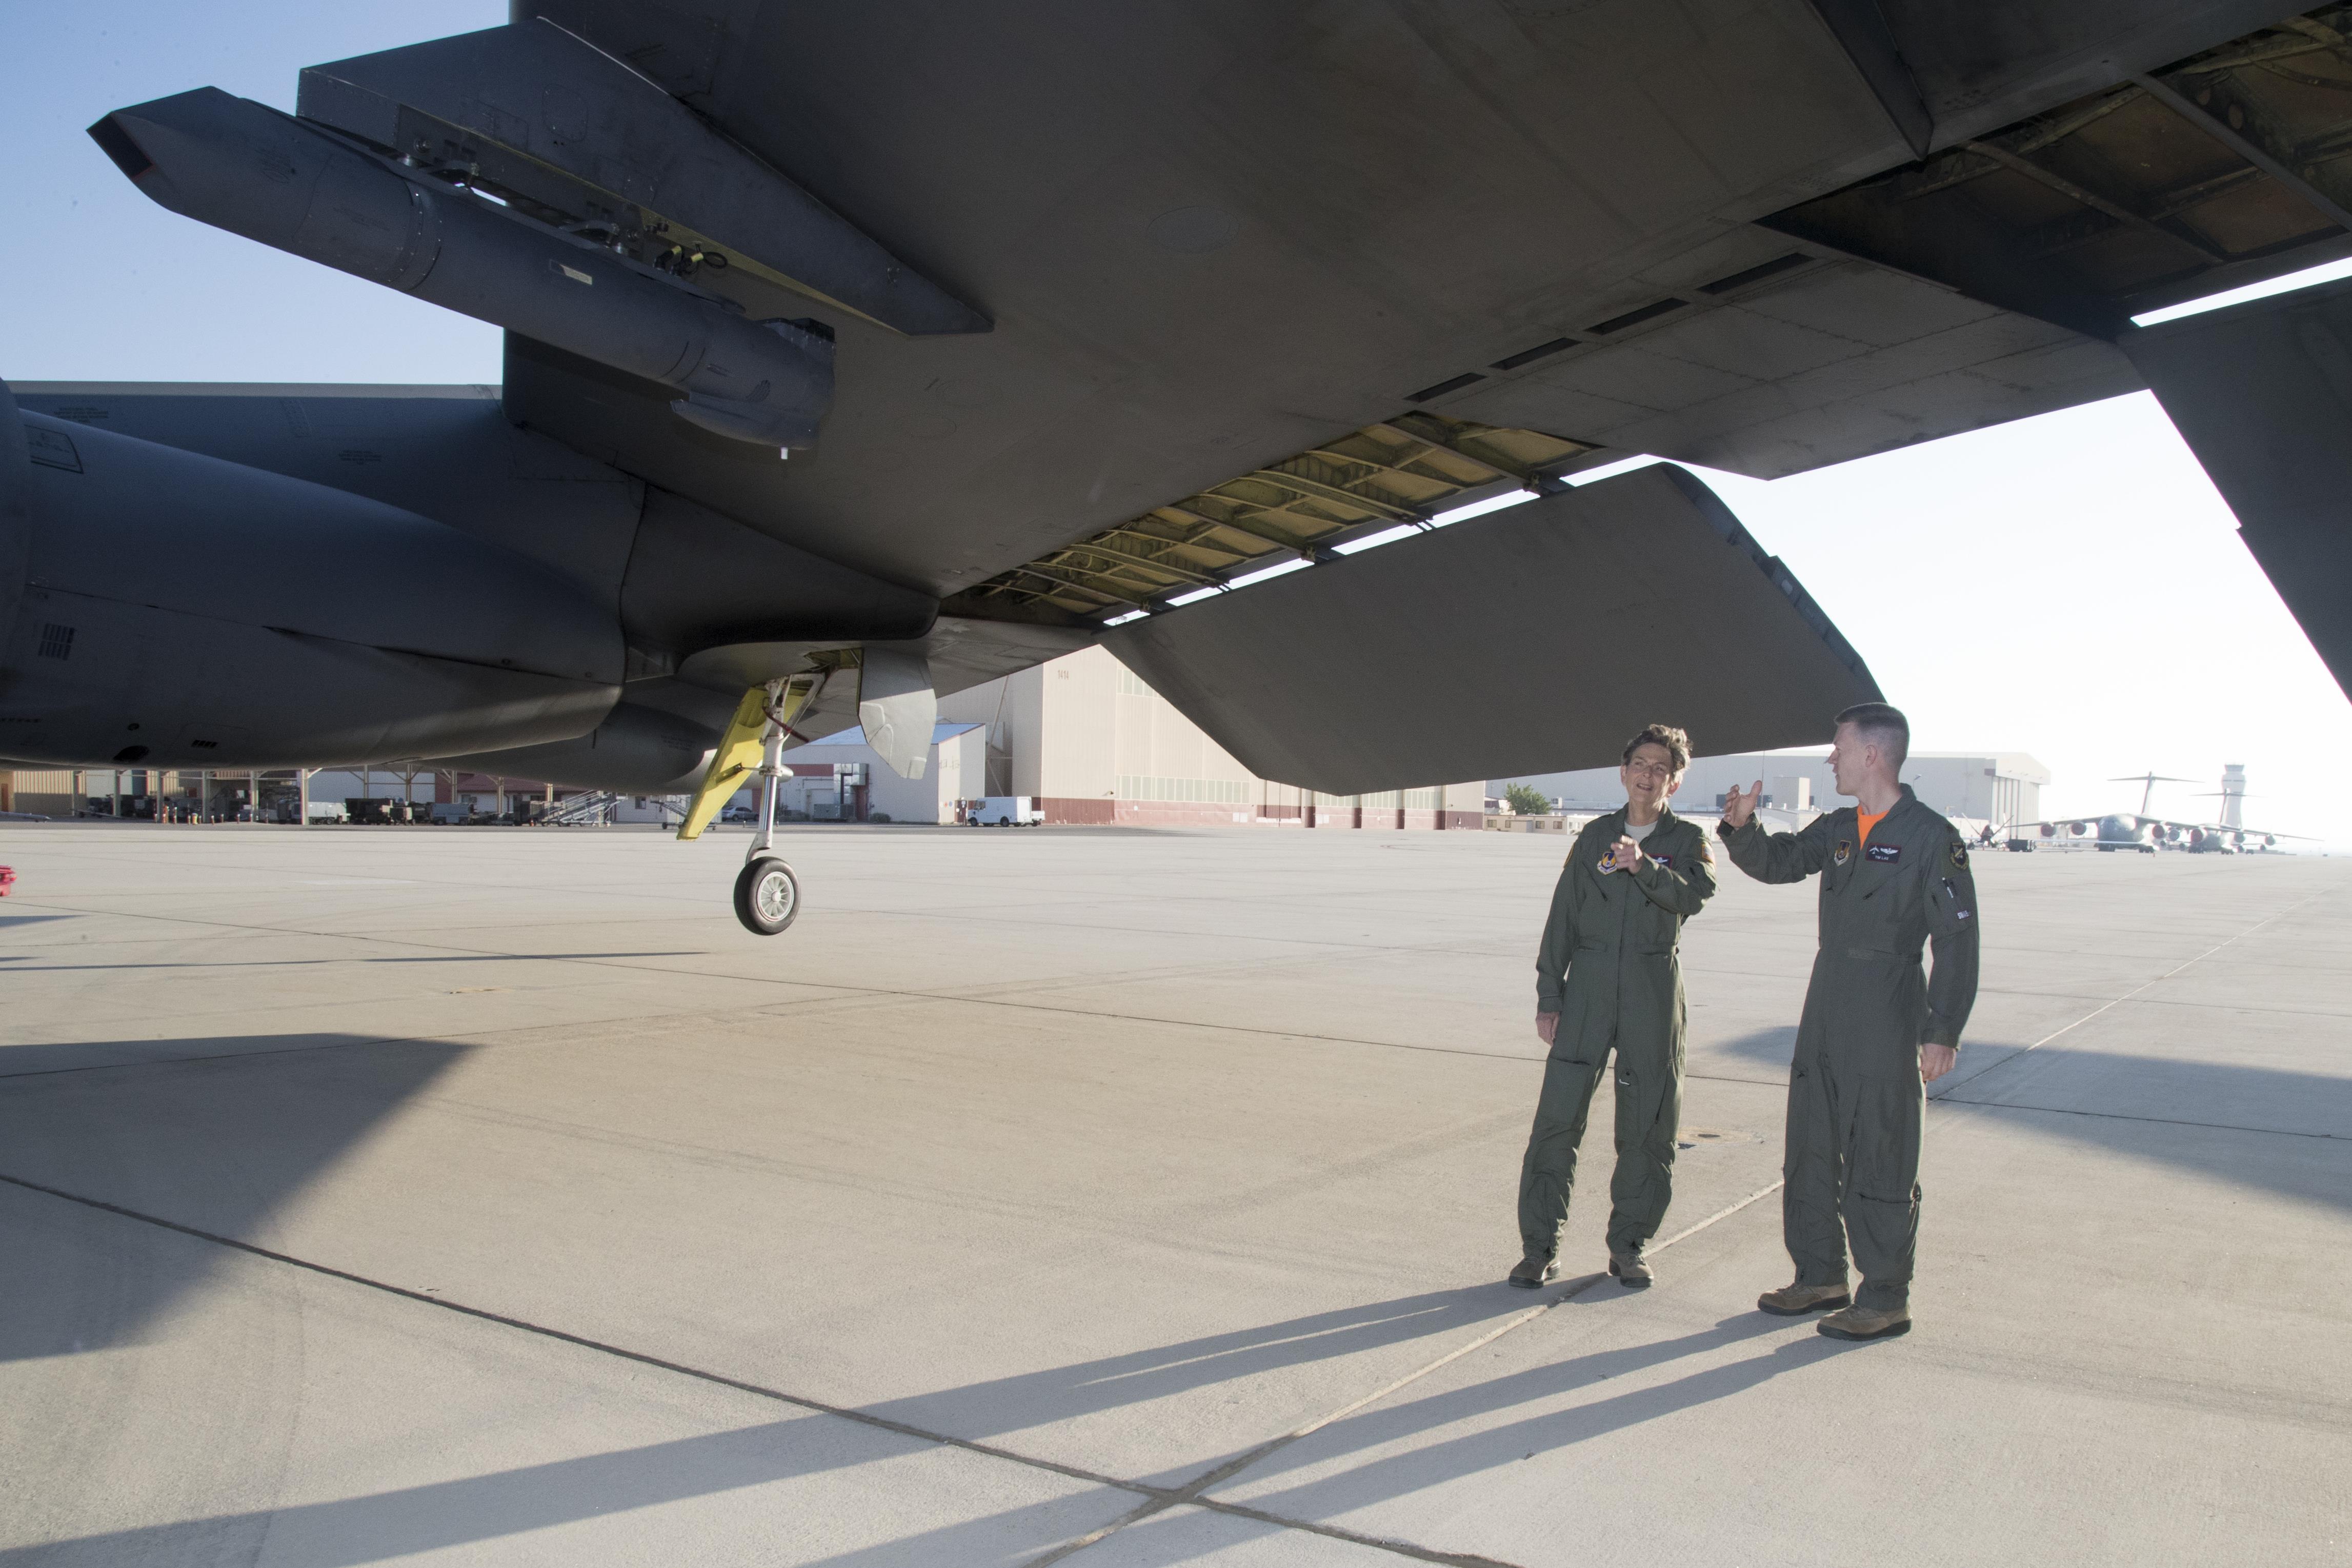 ORIGINAL PATCH Edwards OPERATIONS ENGINEERING USAF 419th FLIGHT TEST SQ